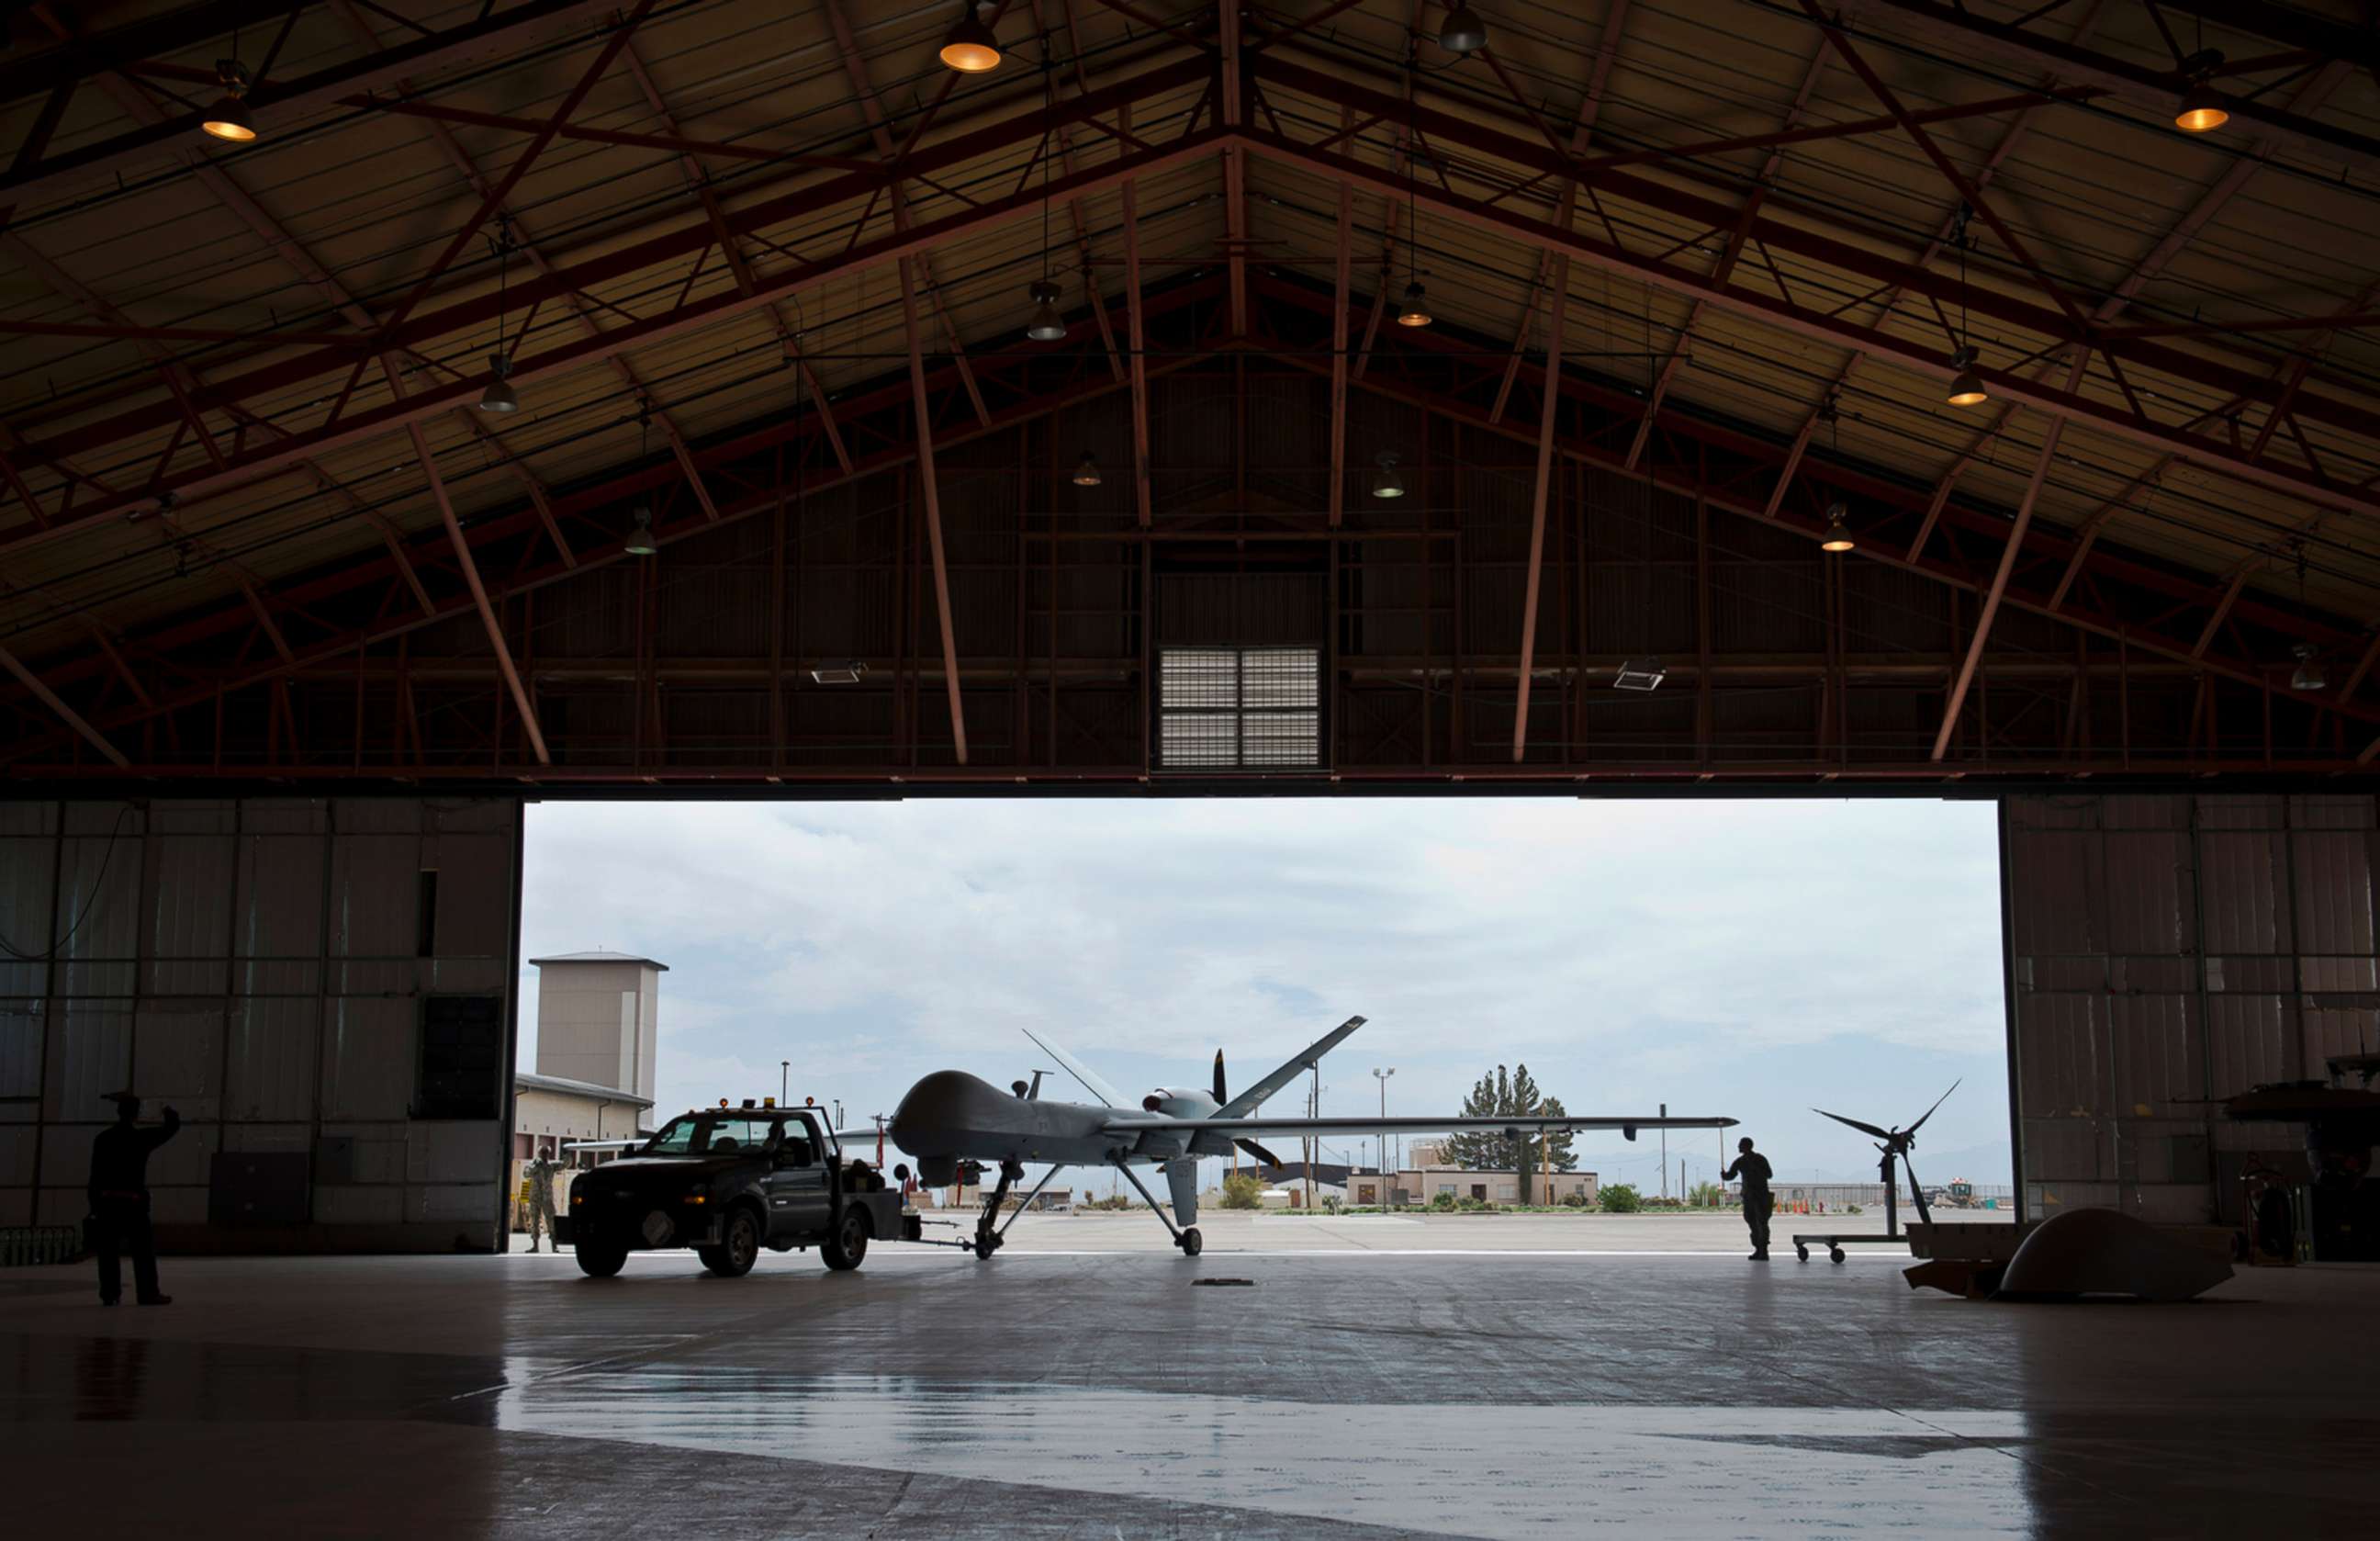 PHOTO: A group of Airmen tow an aircraft into a hangar, April 25, 2013 at Holloman Air Force Base, New Mexico. 